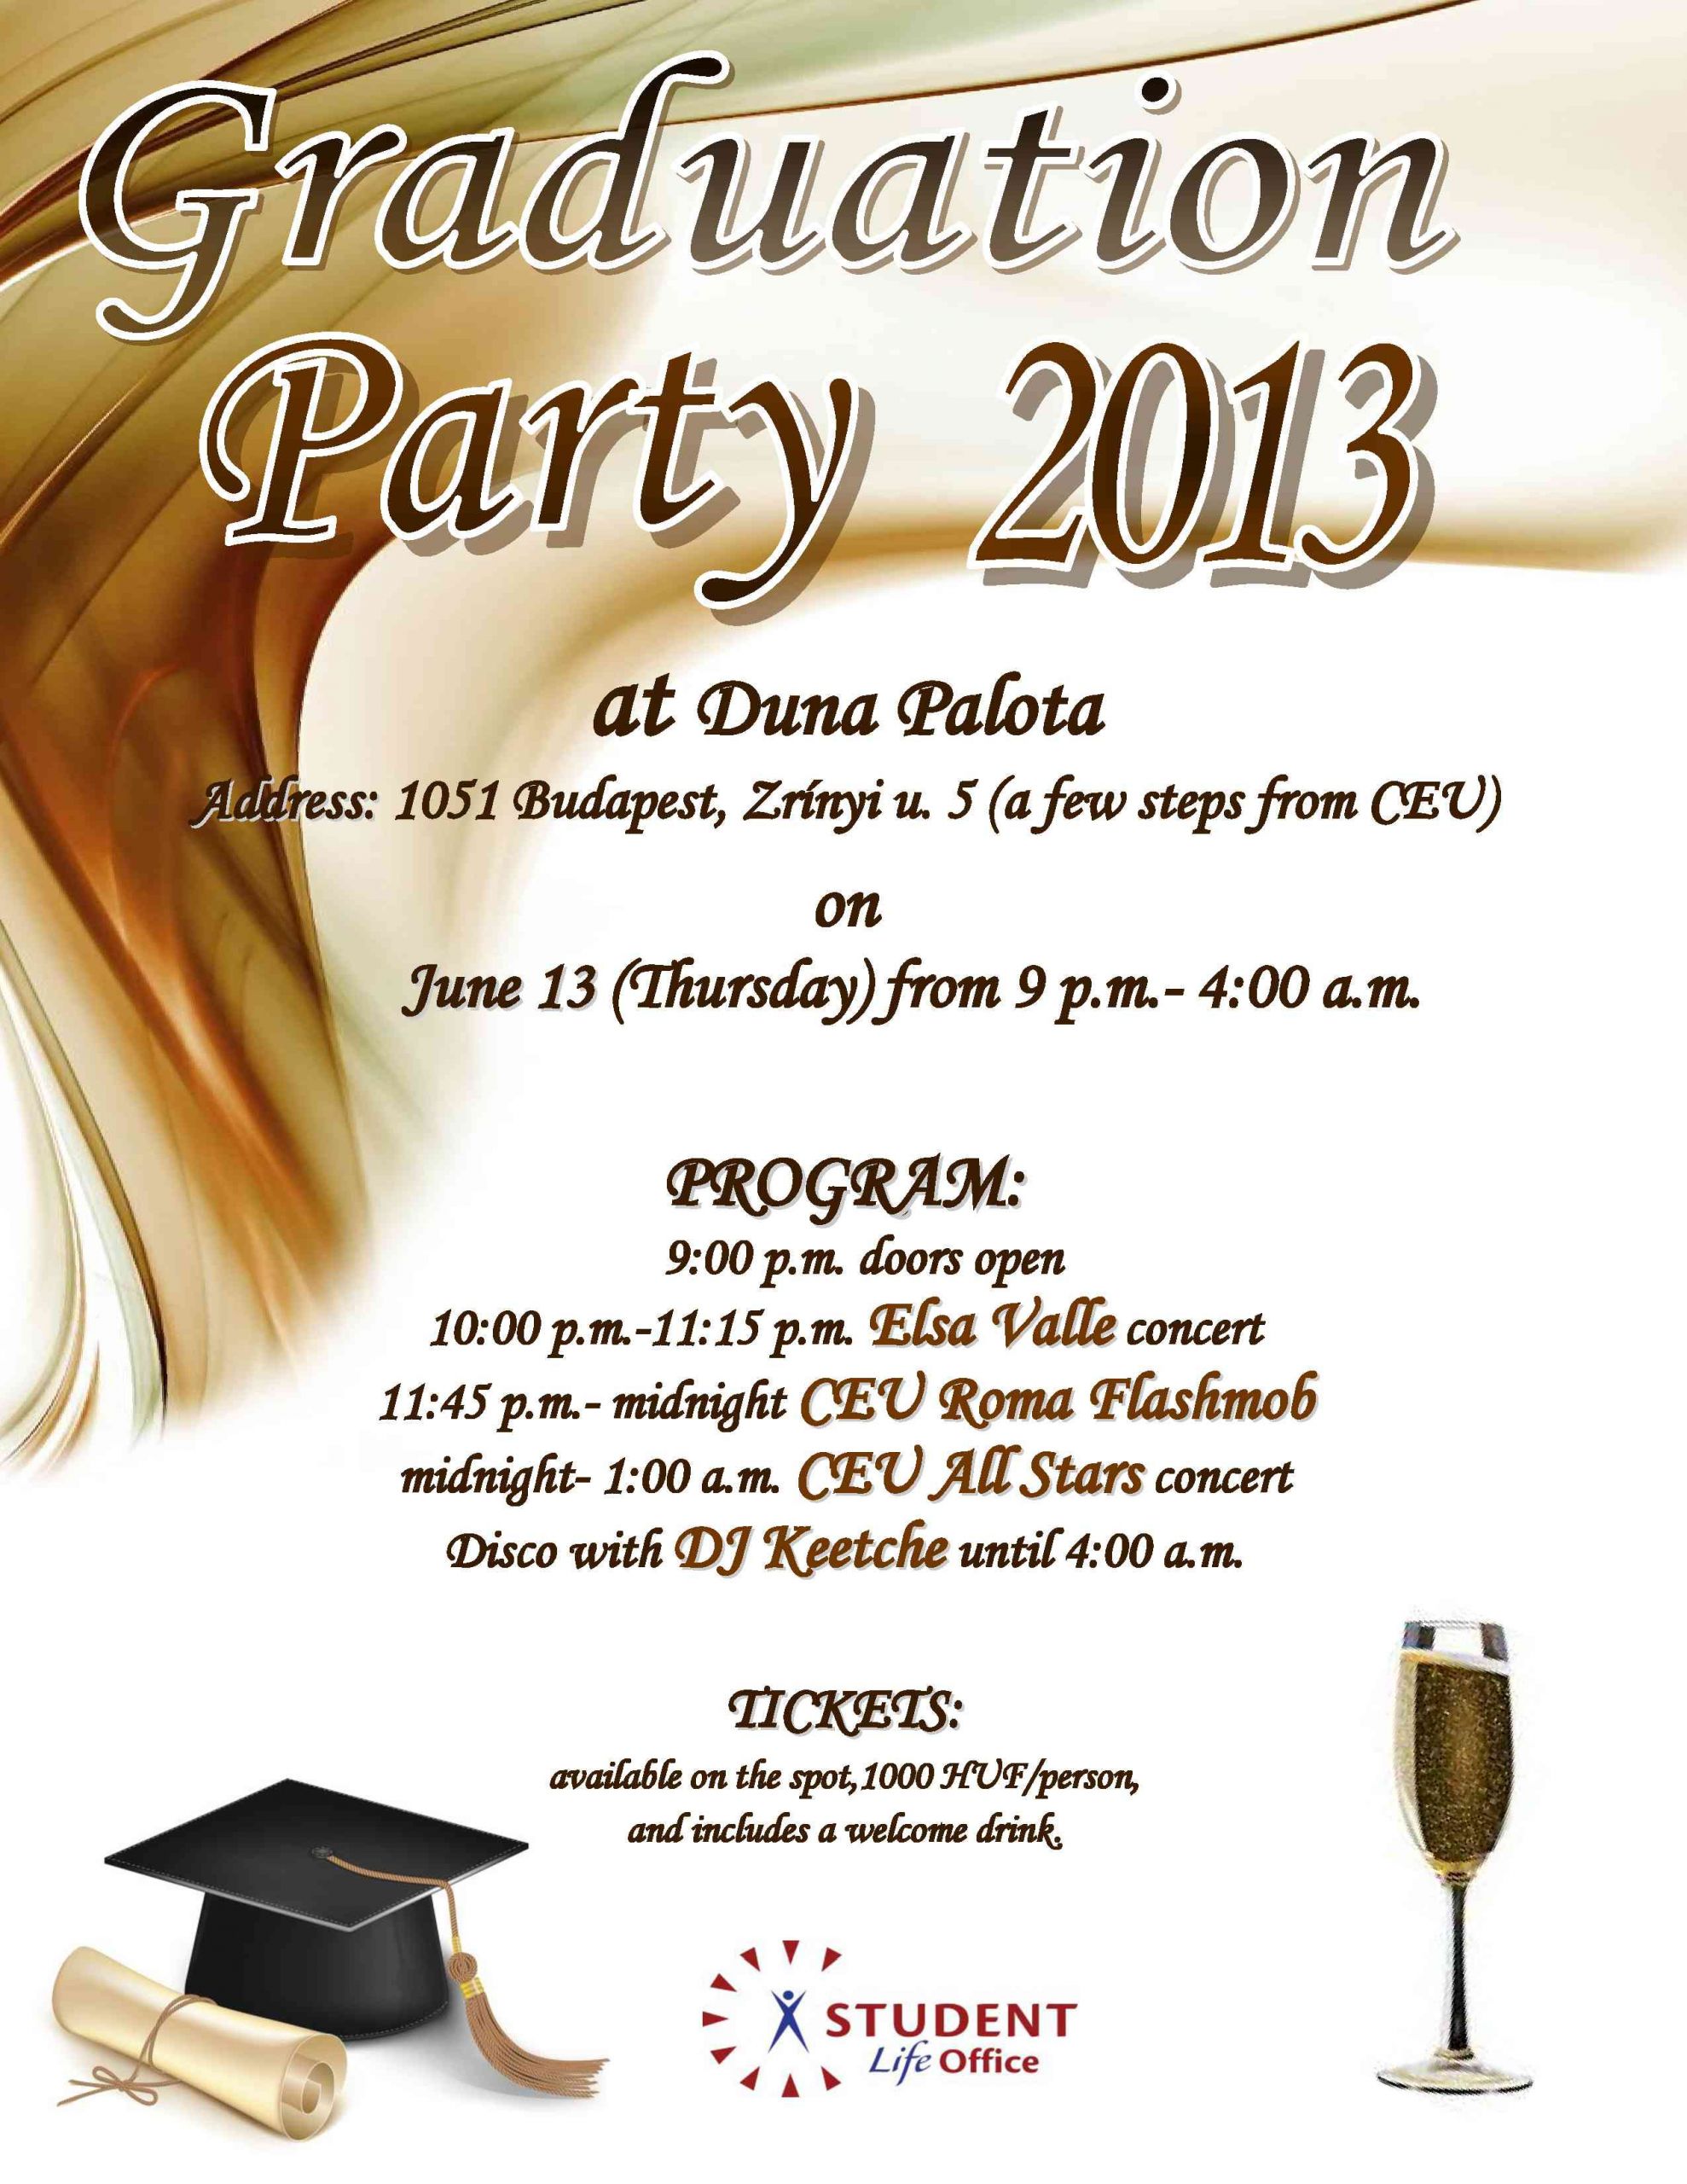 Graduation Party Program Ideas
 Graduation Party 2013